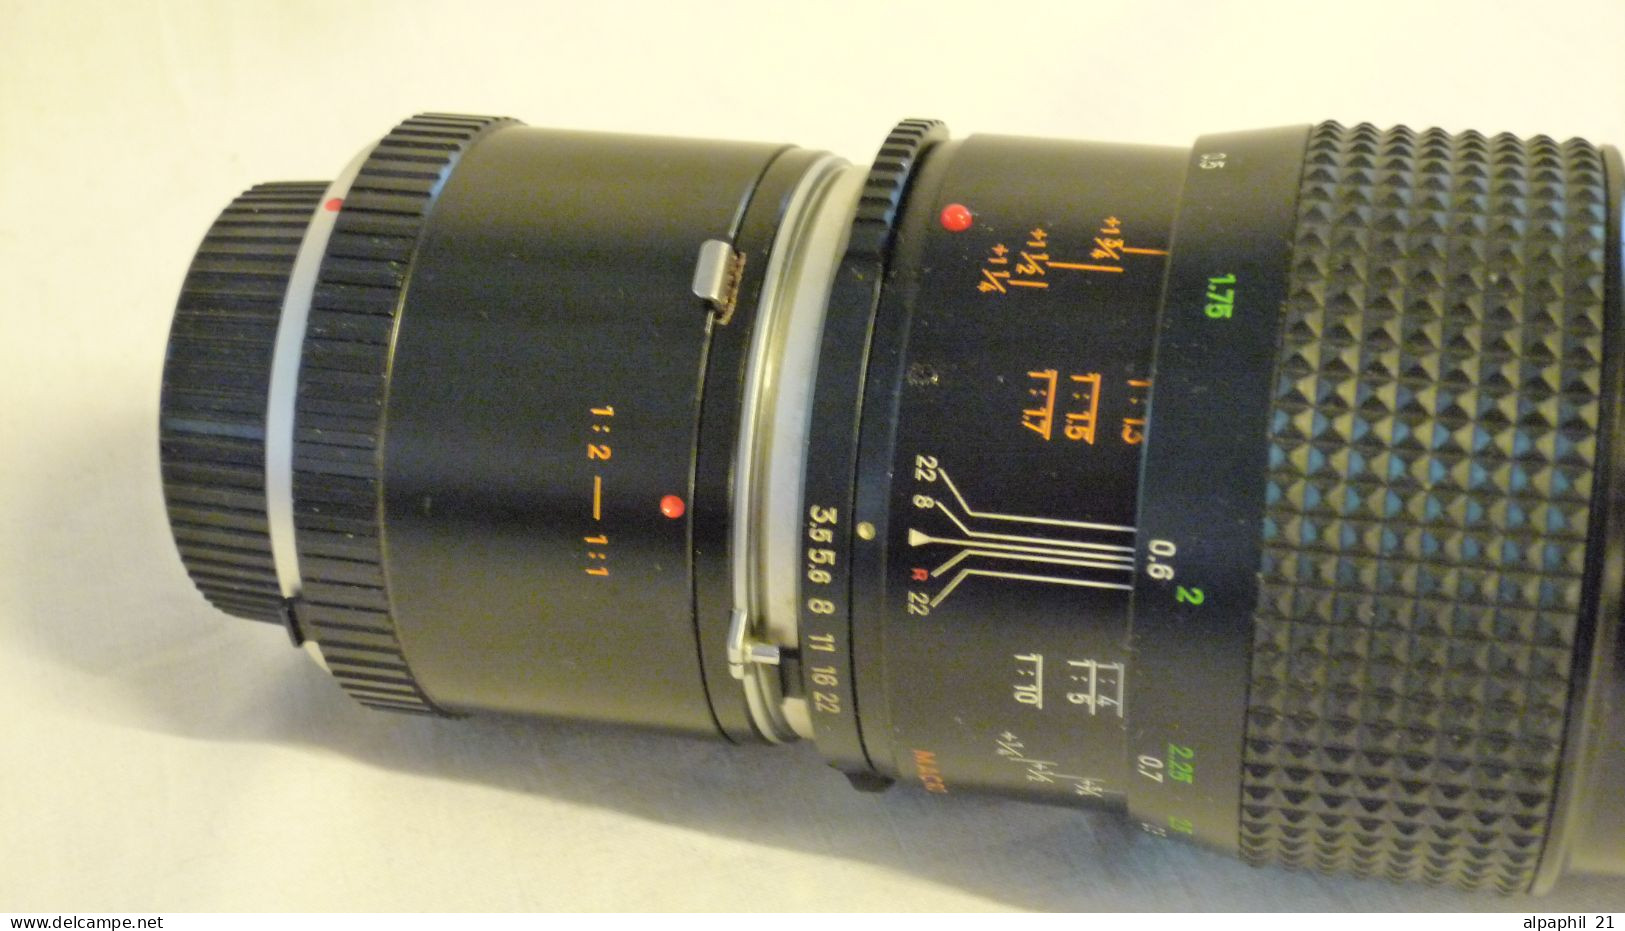 Minolta MC Macro Lens Rokkor-X 100 mm f/3.5 with adapter